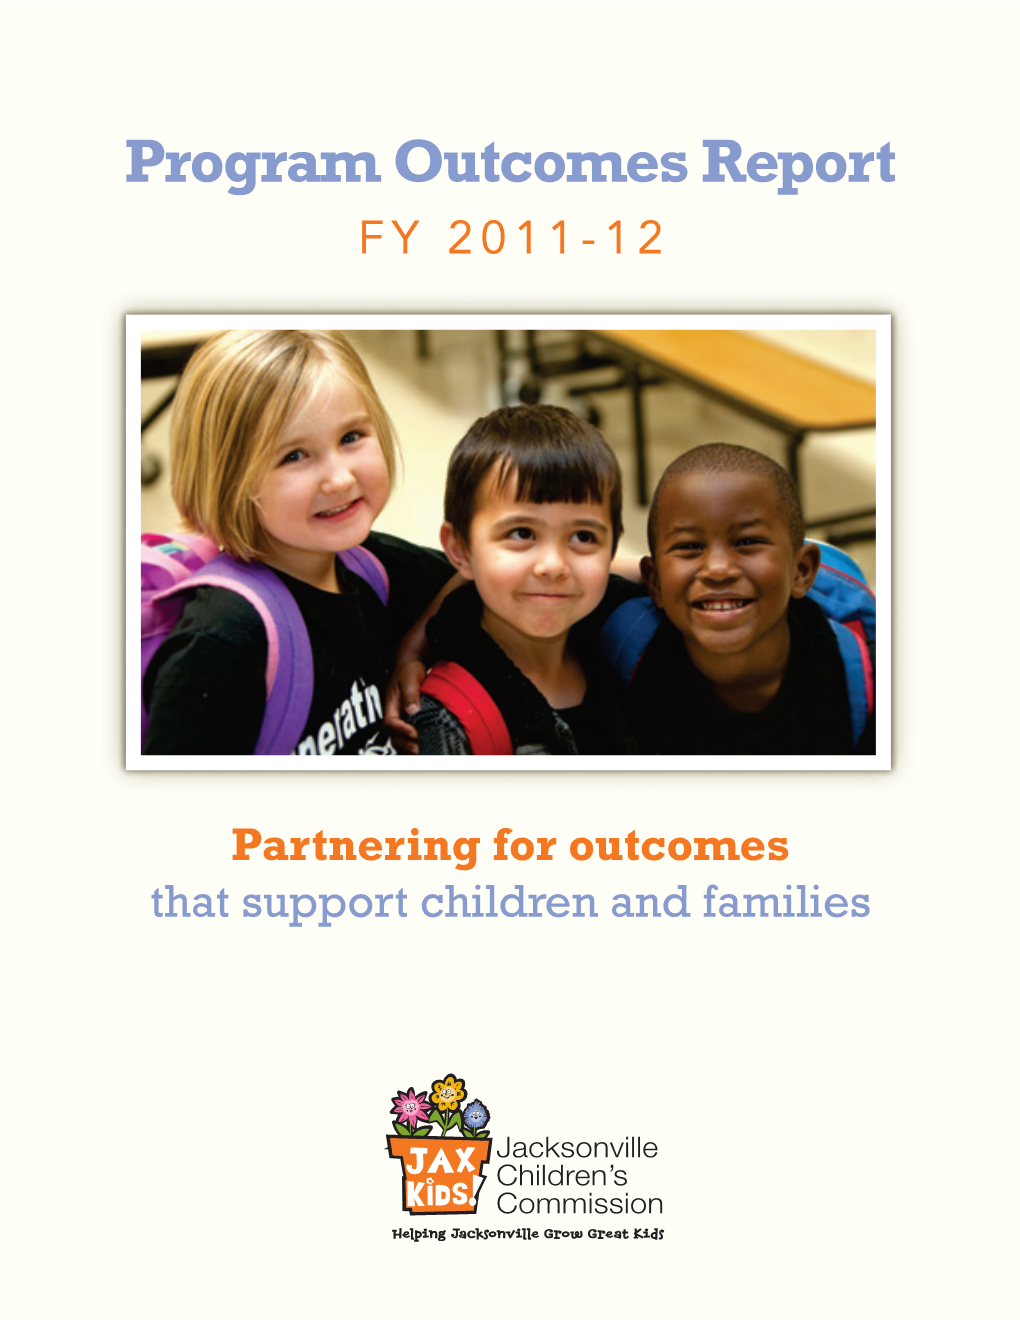 FY 2011-2012 Program Outcomes Report